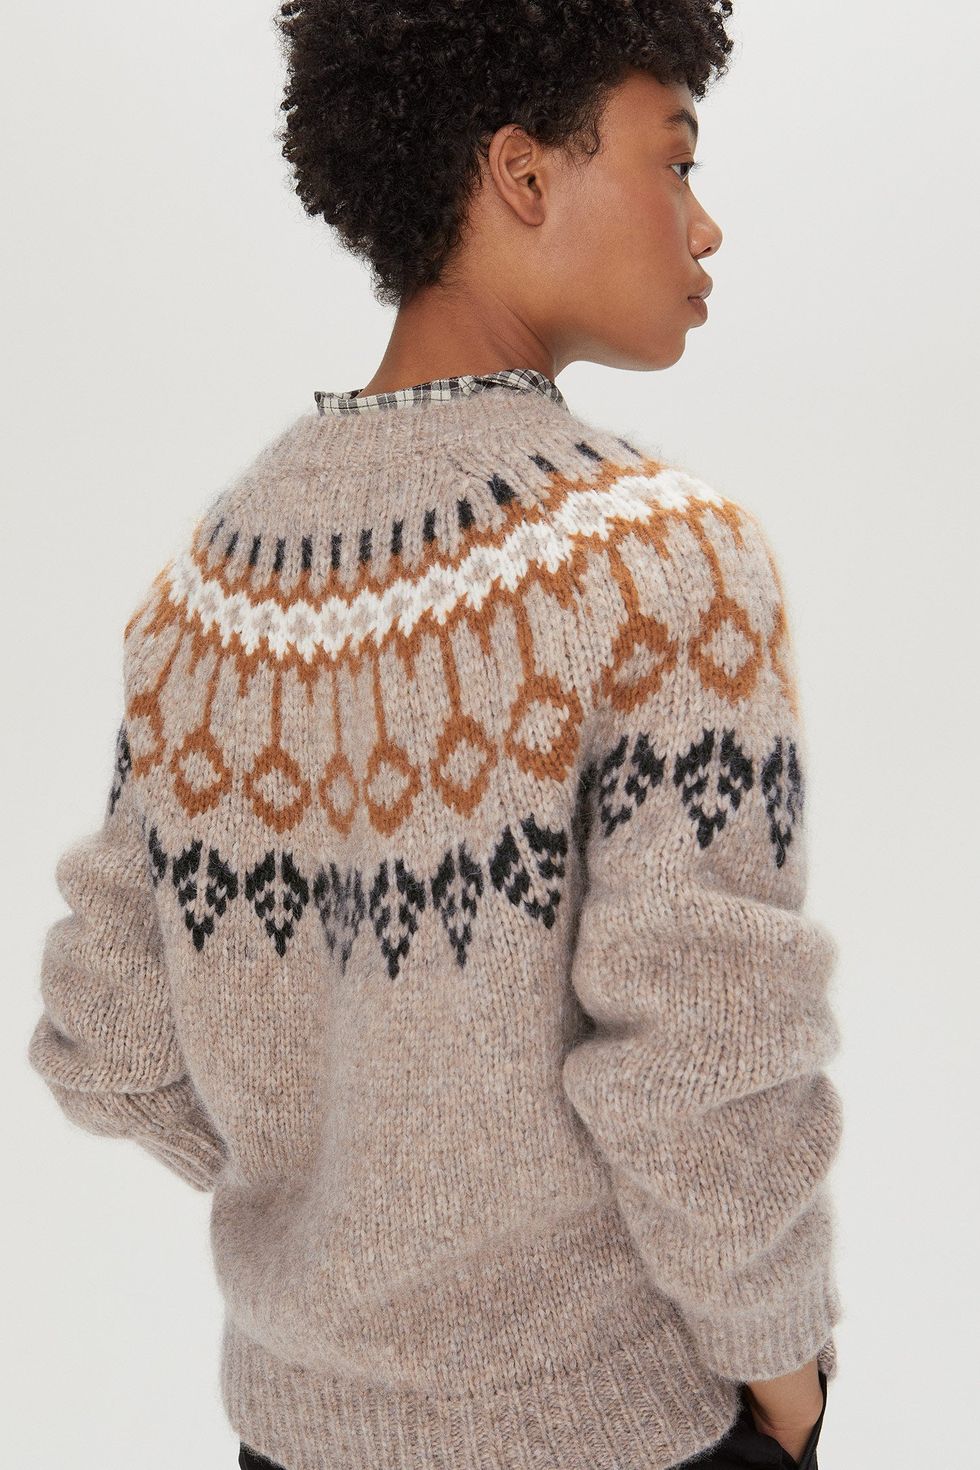 The Duchess of Cambridge wears cosy Fair Isle knit